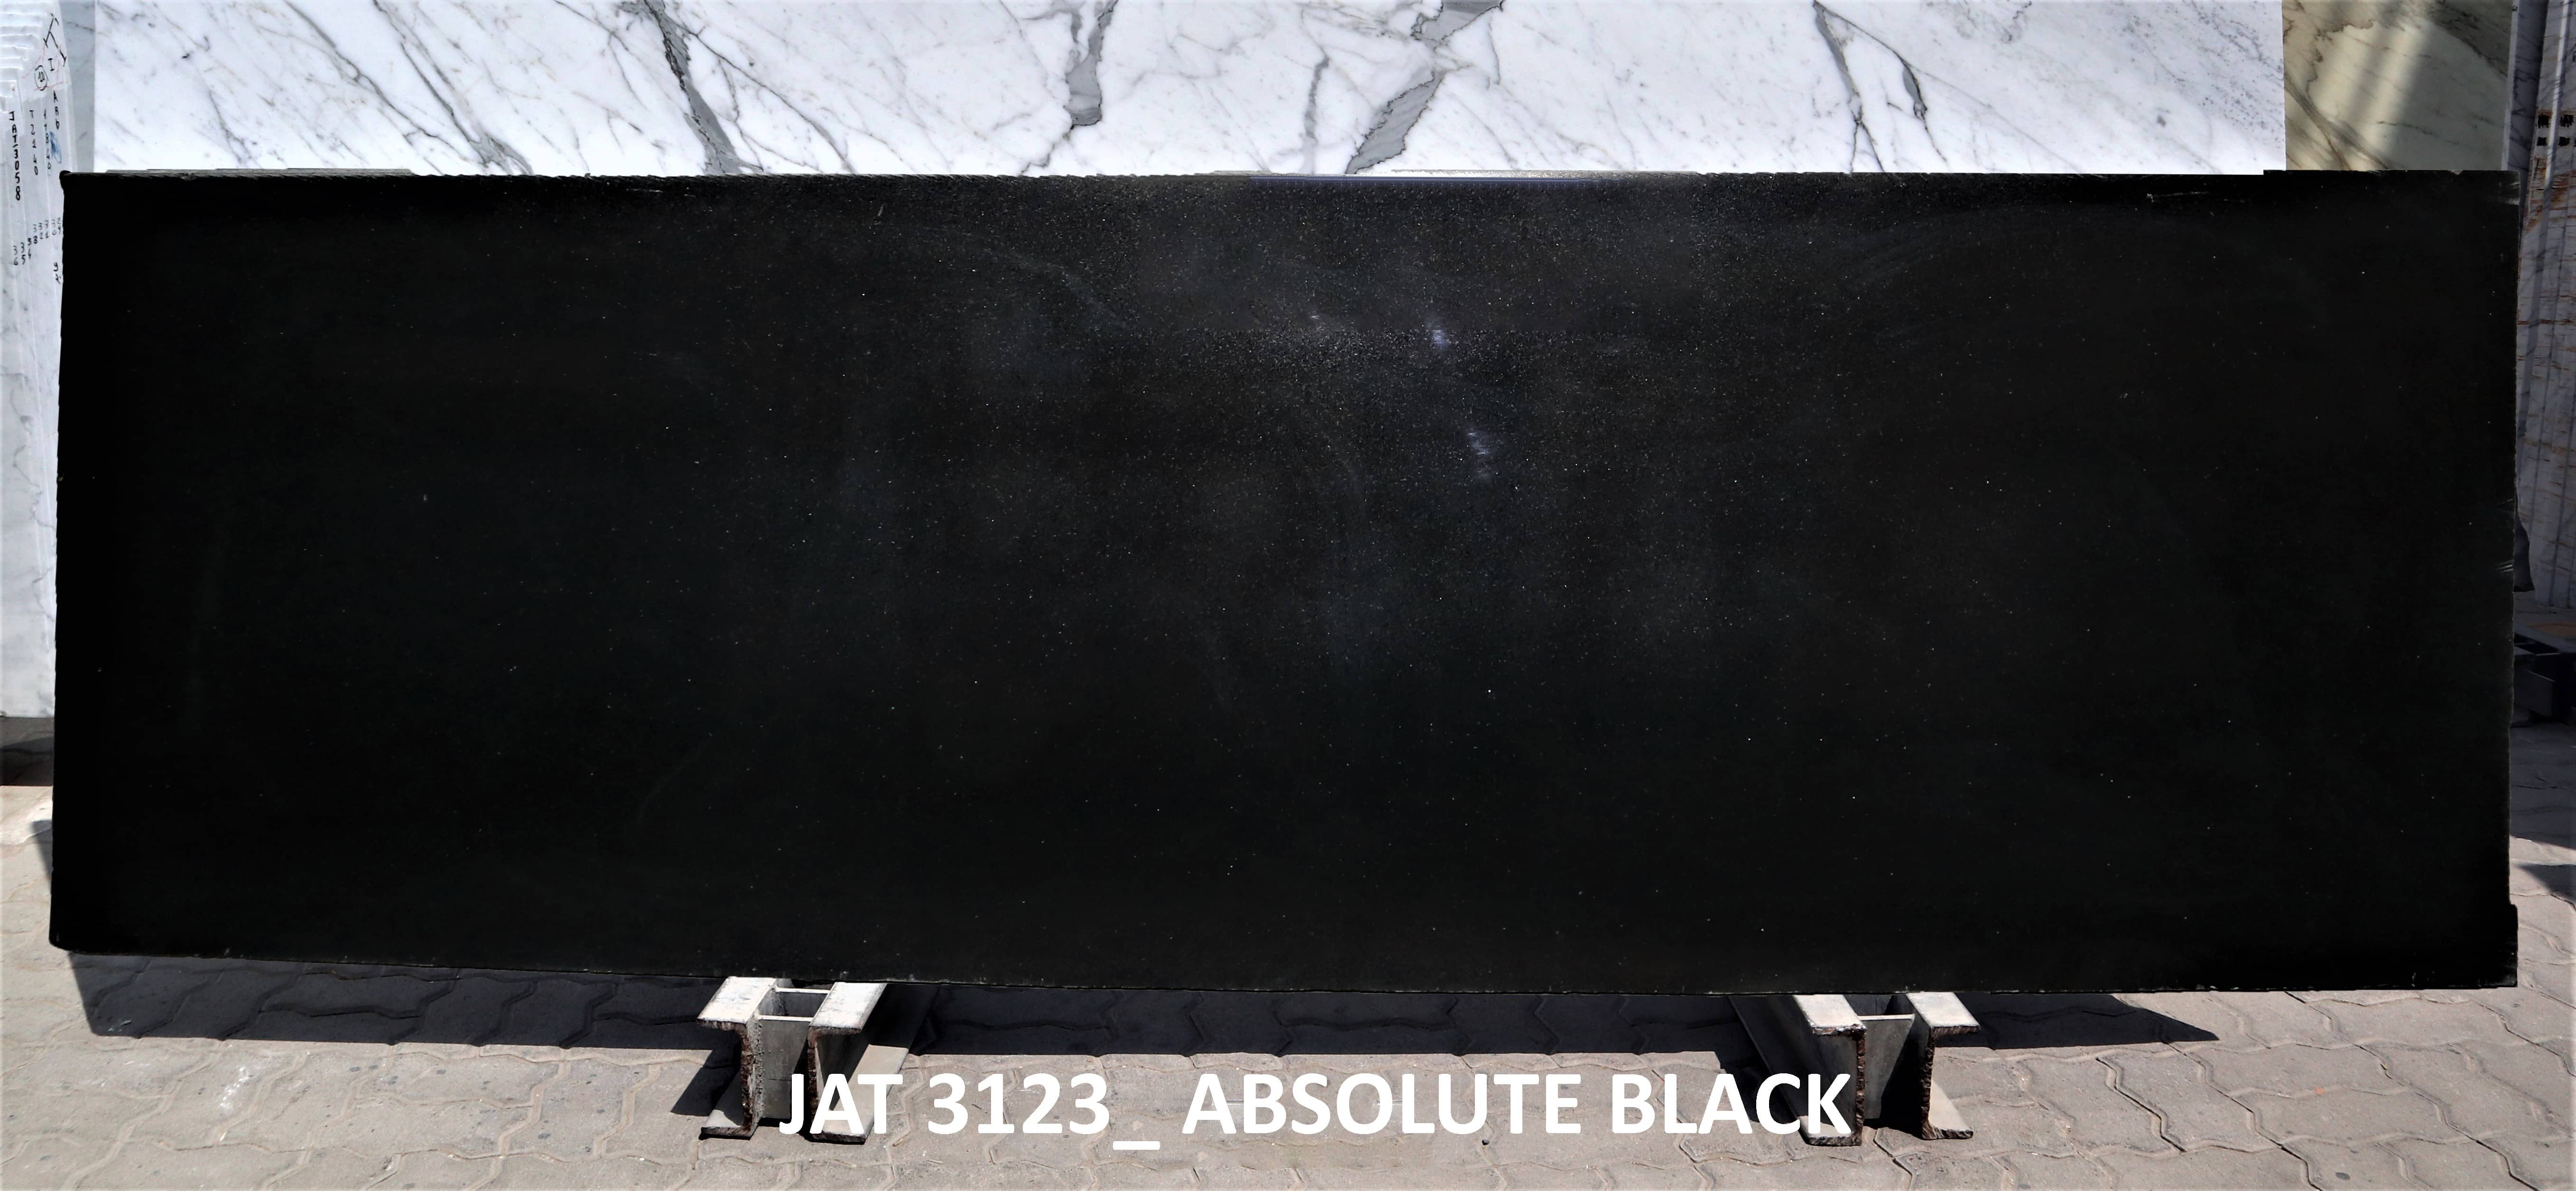 ABSOLUTE BLACK